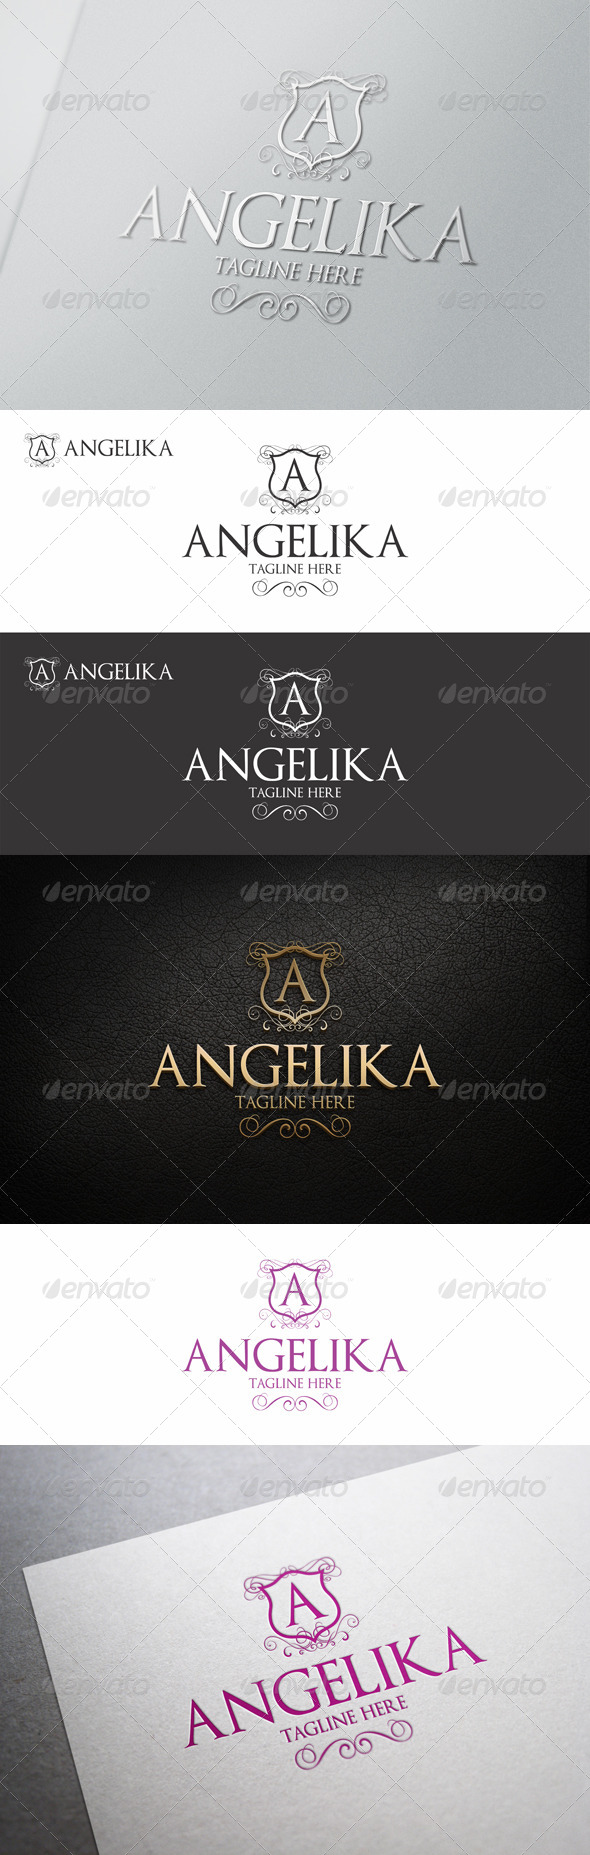 Angelika - Elegant Calligraphic Crest Logo